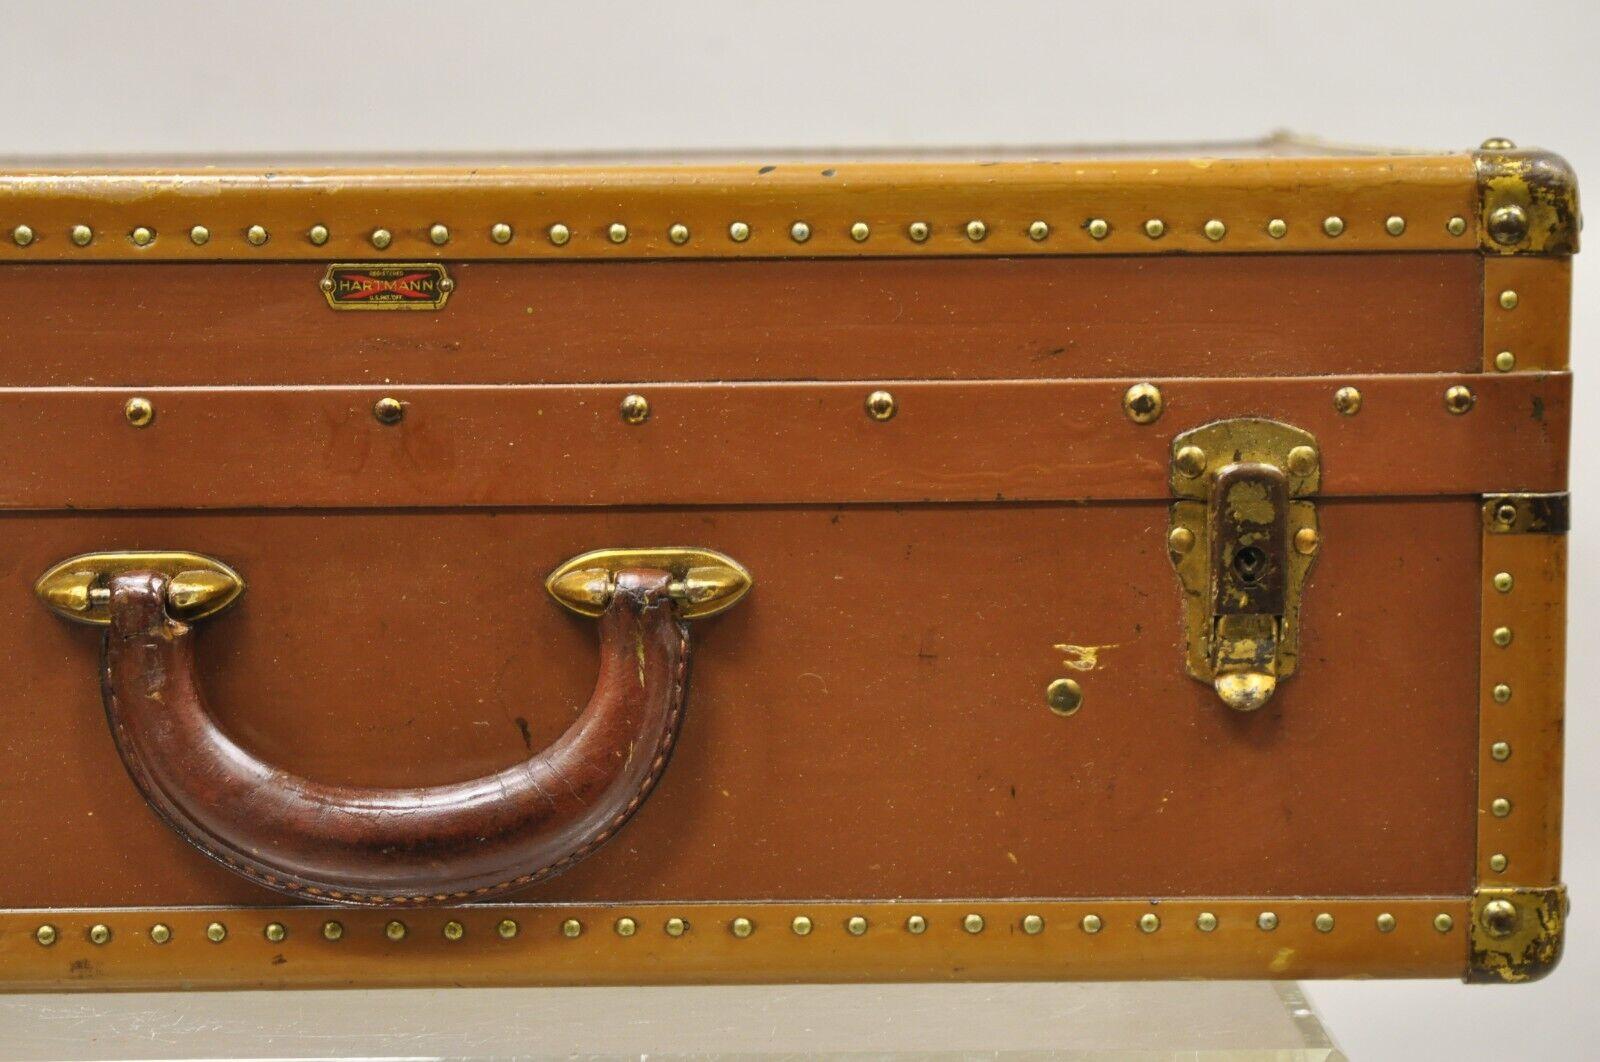 20ième siècle Vintage Hartmann Gibraltarized Brown Hard Case Suitcase Briefcase Luggage en vente